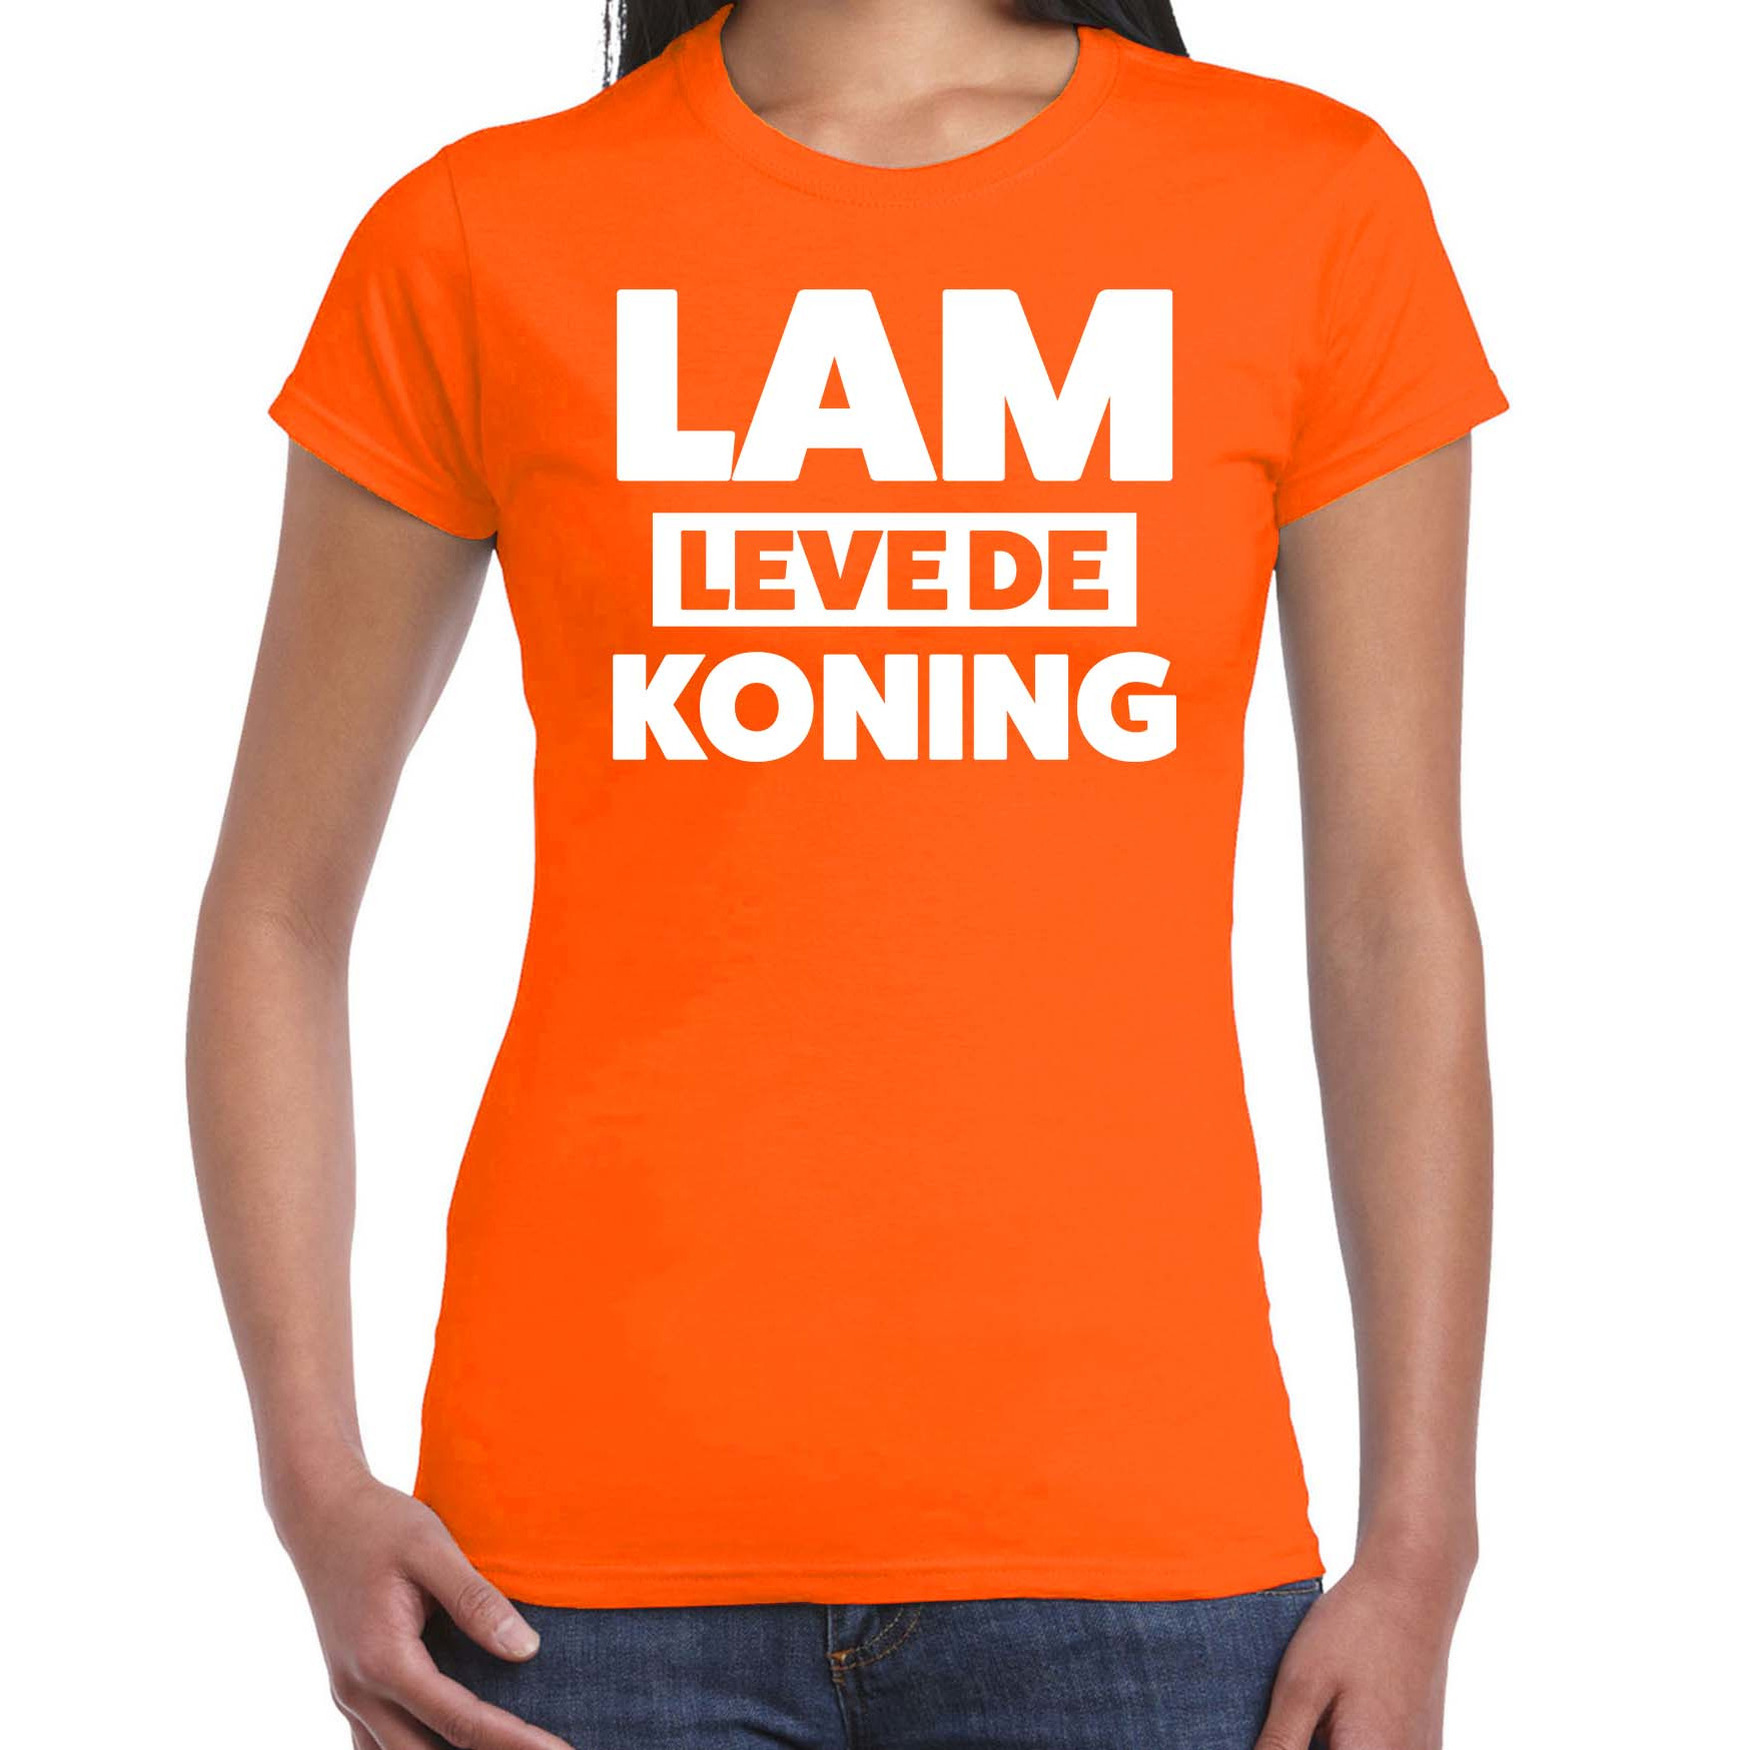 Lam leve de koning t-shirt oranje voor dames - Koningsdag shirts